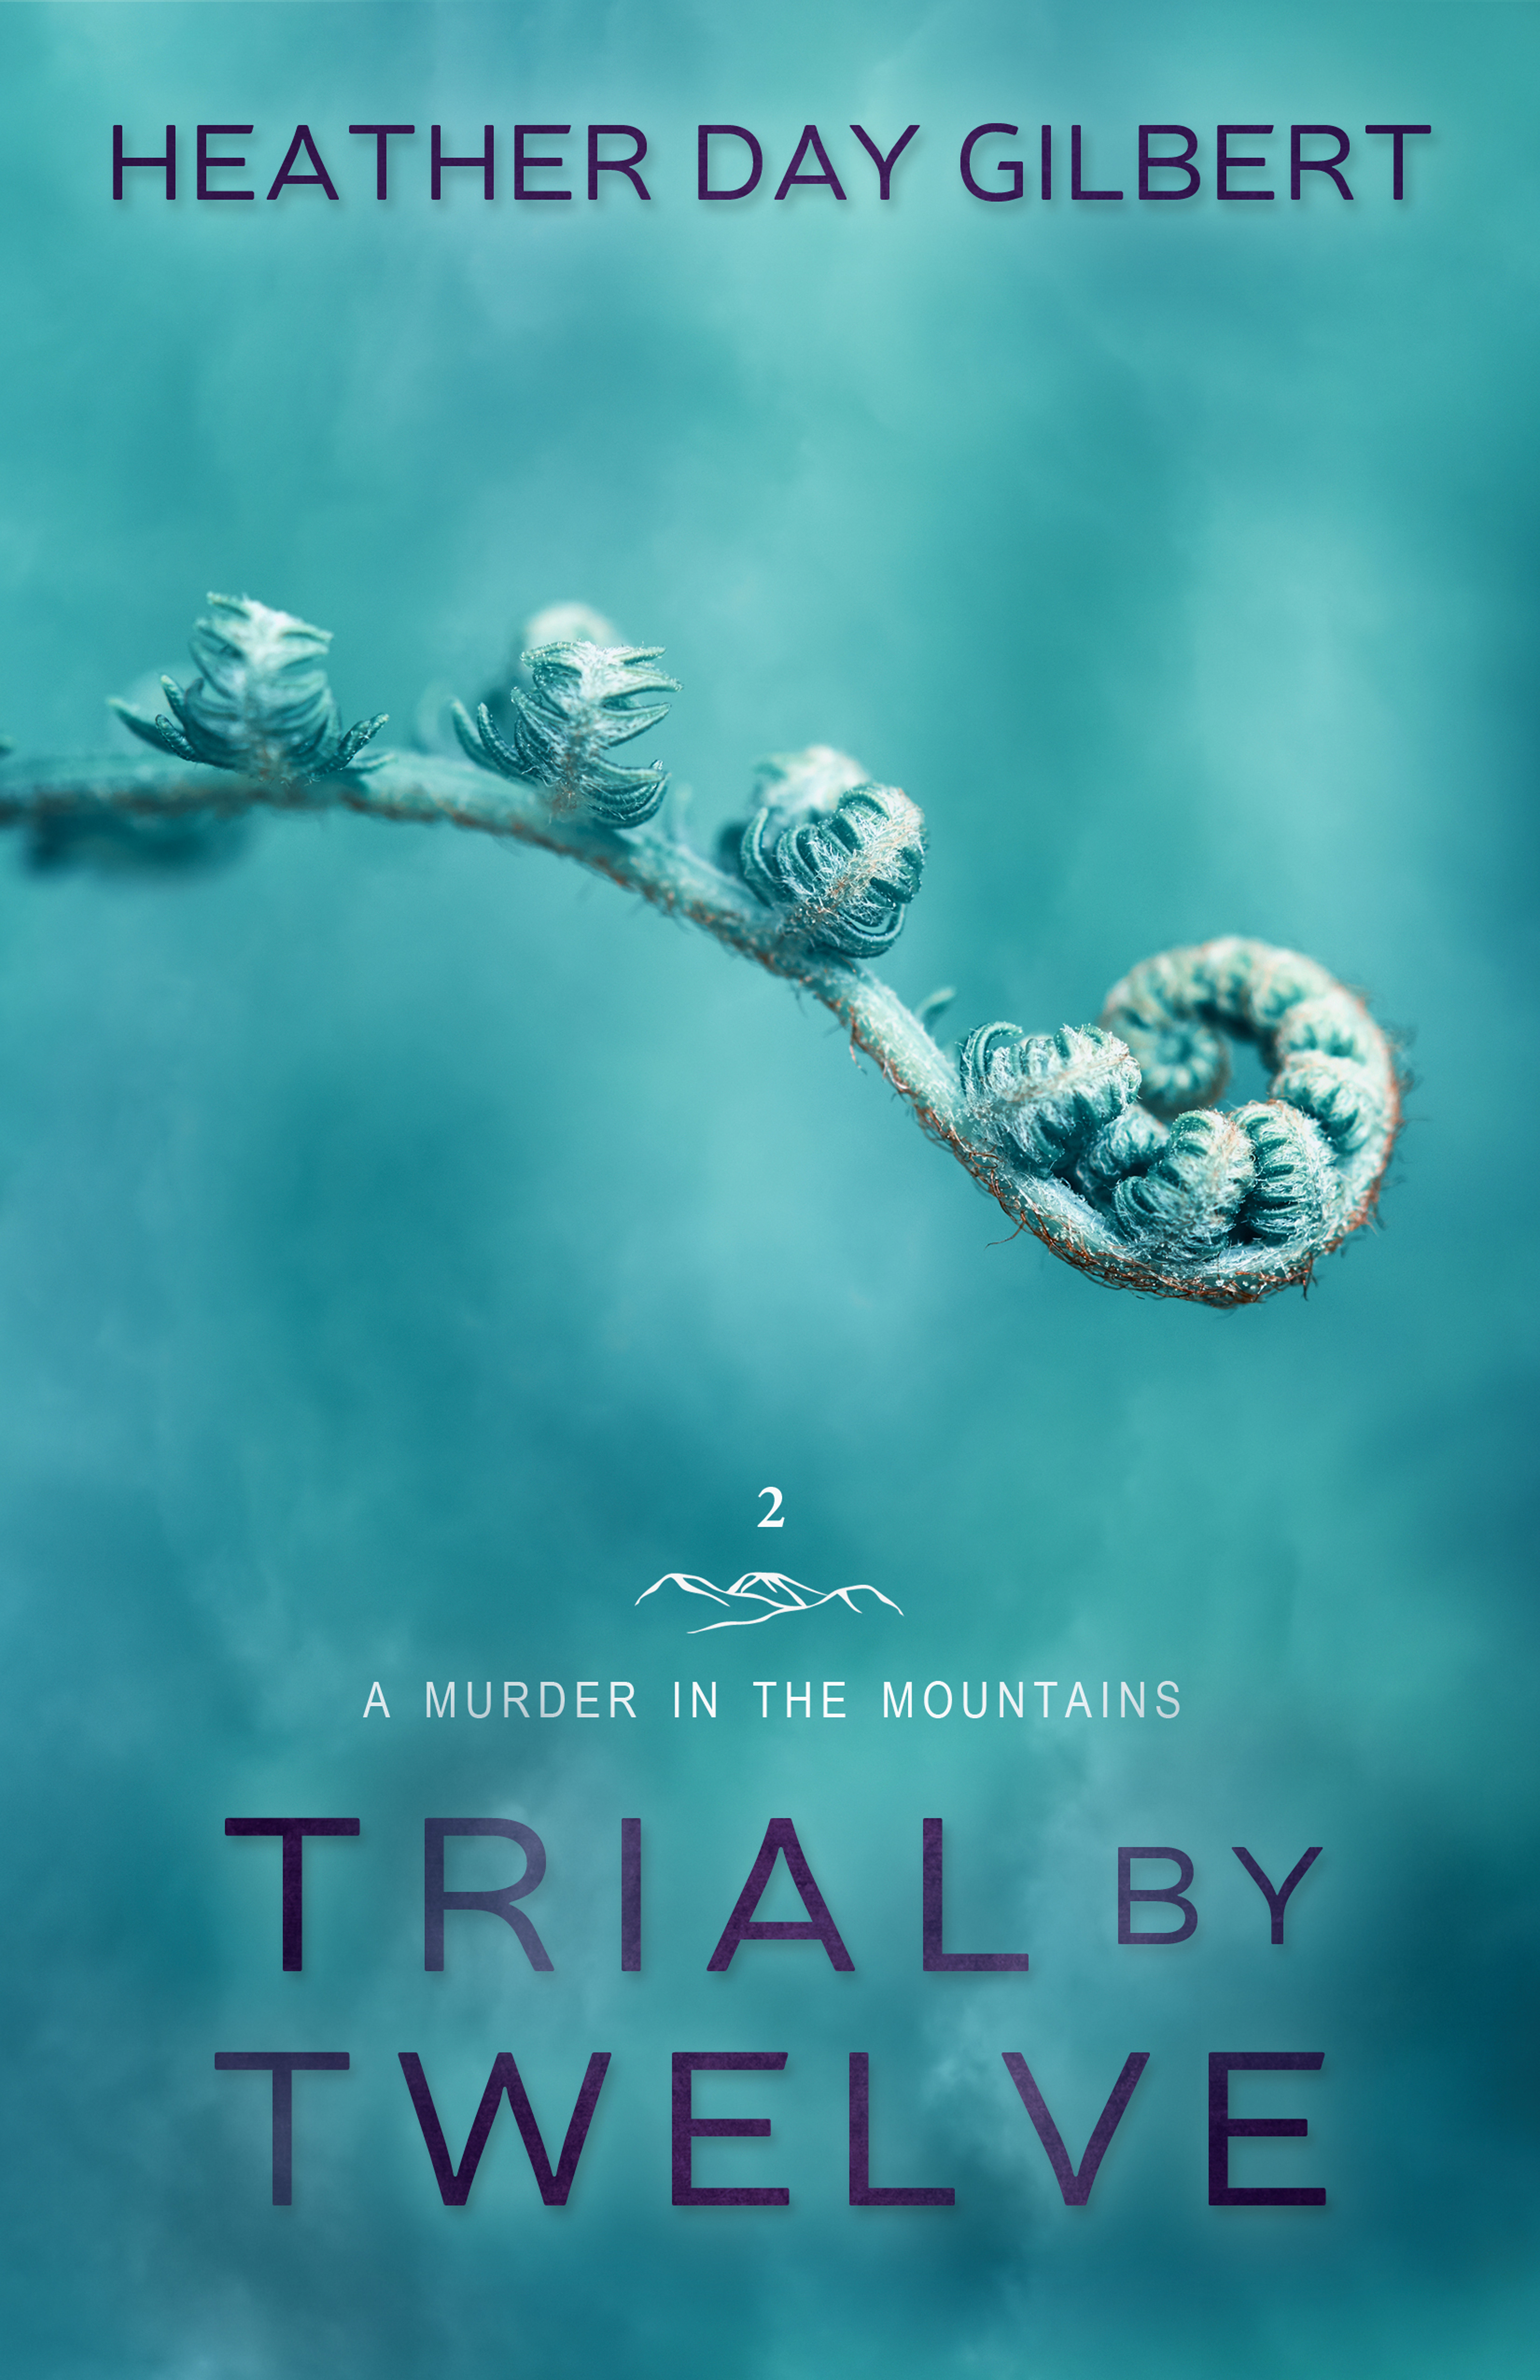 Trial by Twelve, #Appalachian #Mystery on Amazon here: http://amzn.to/1ynw3hP